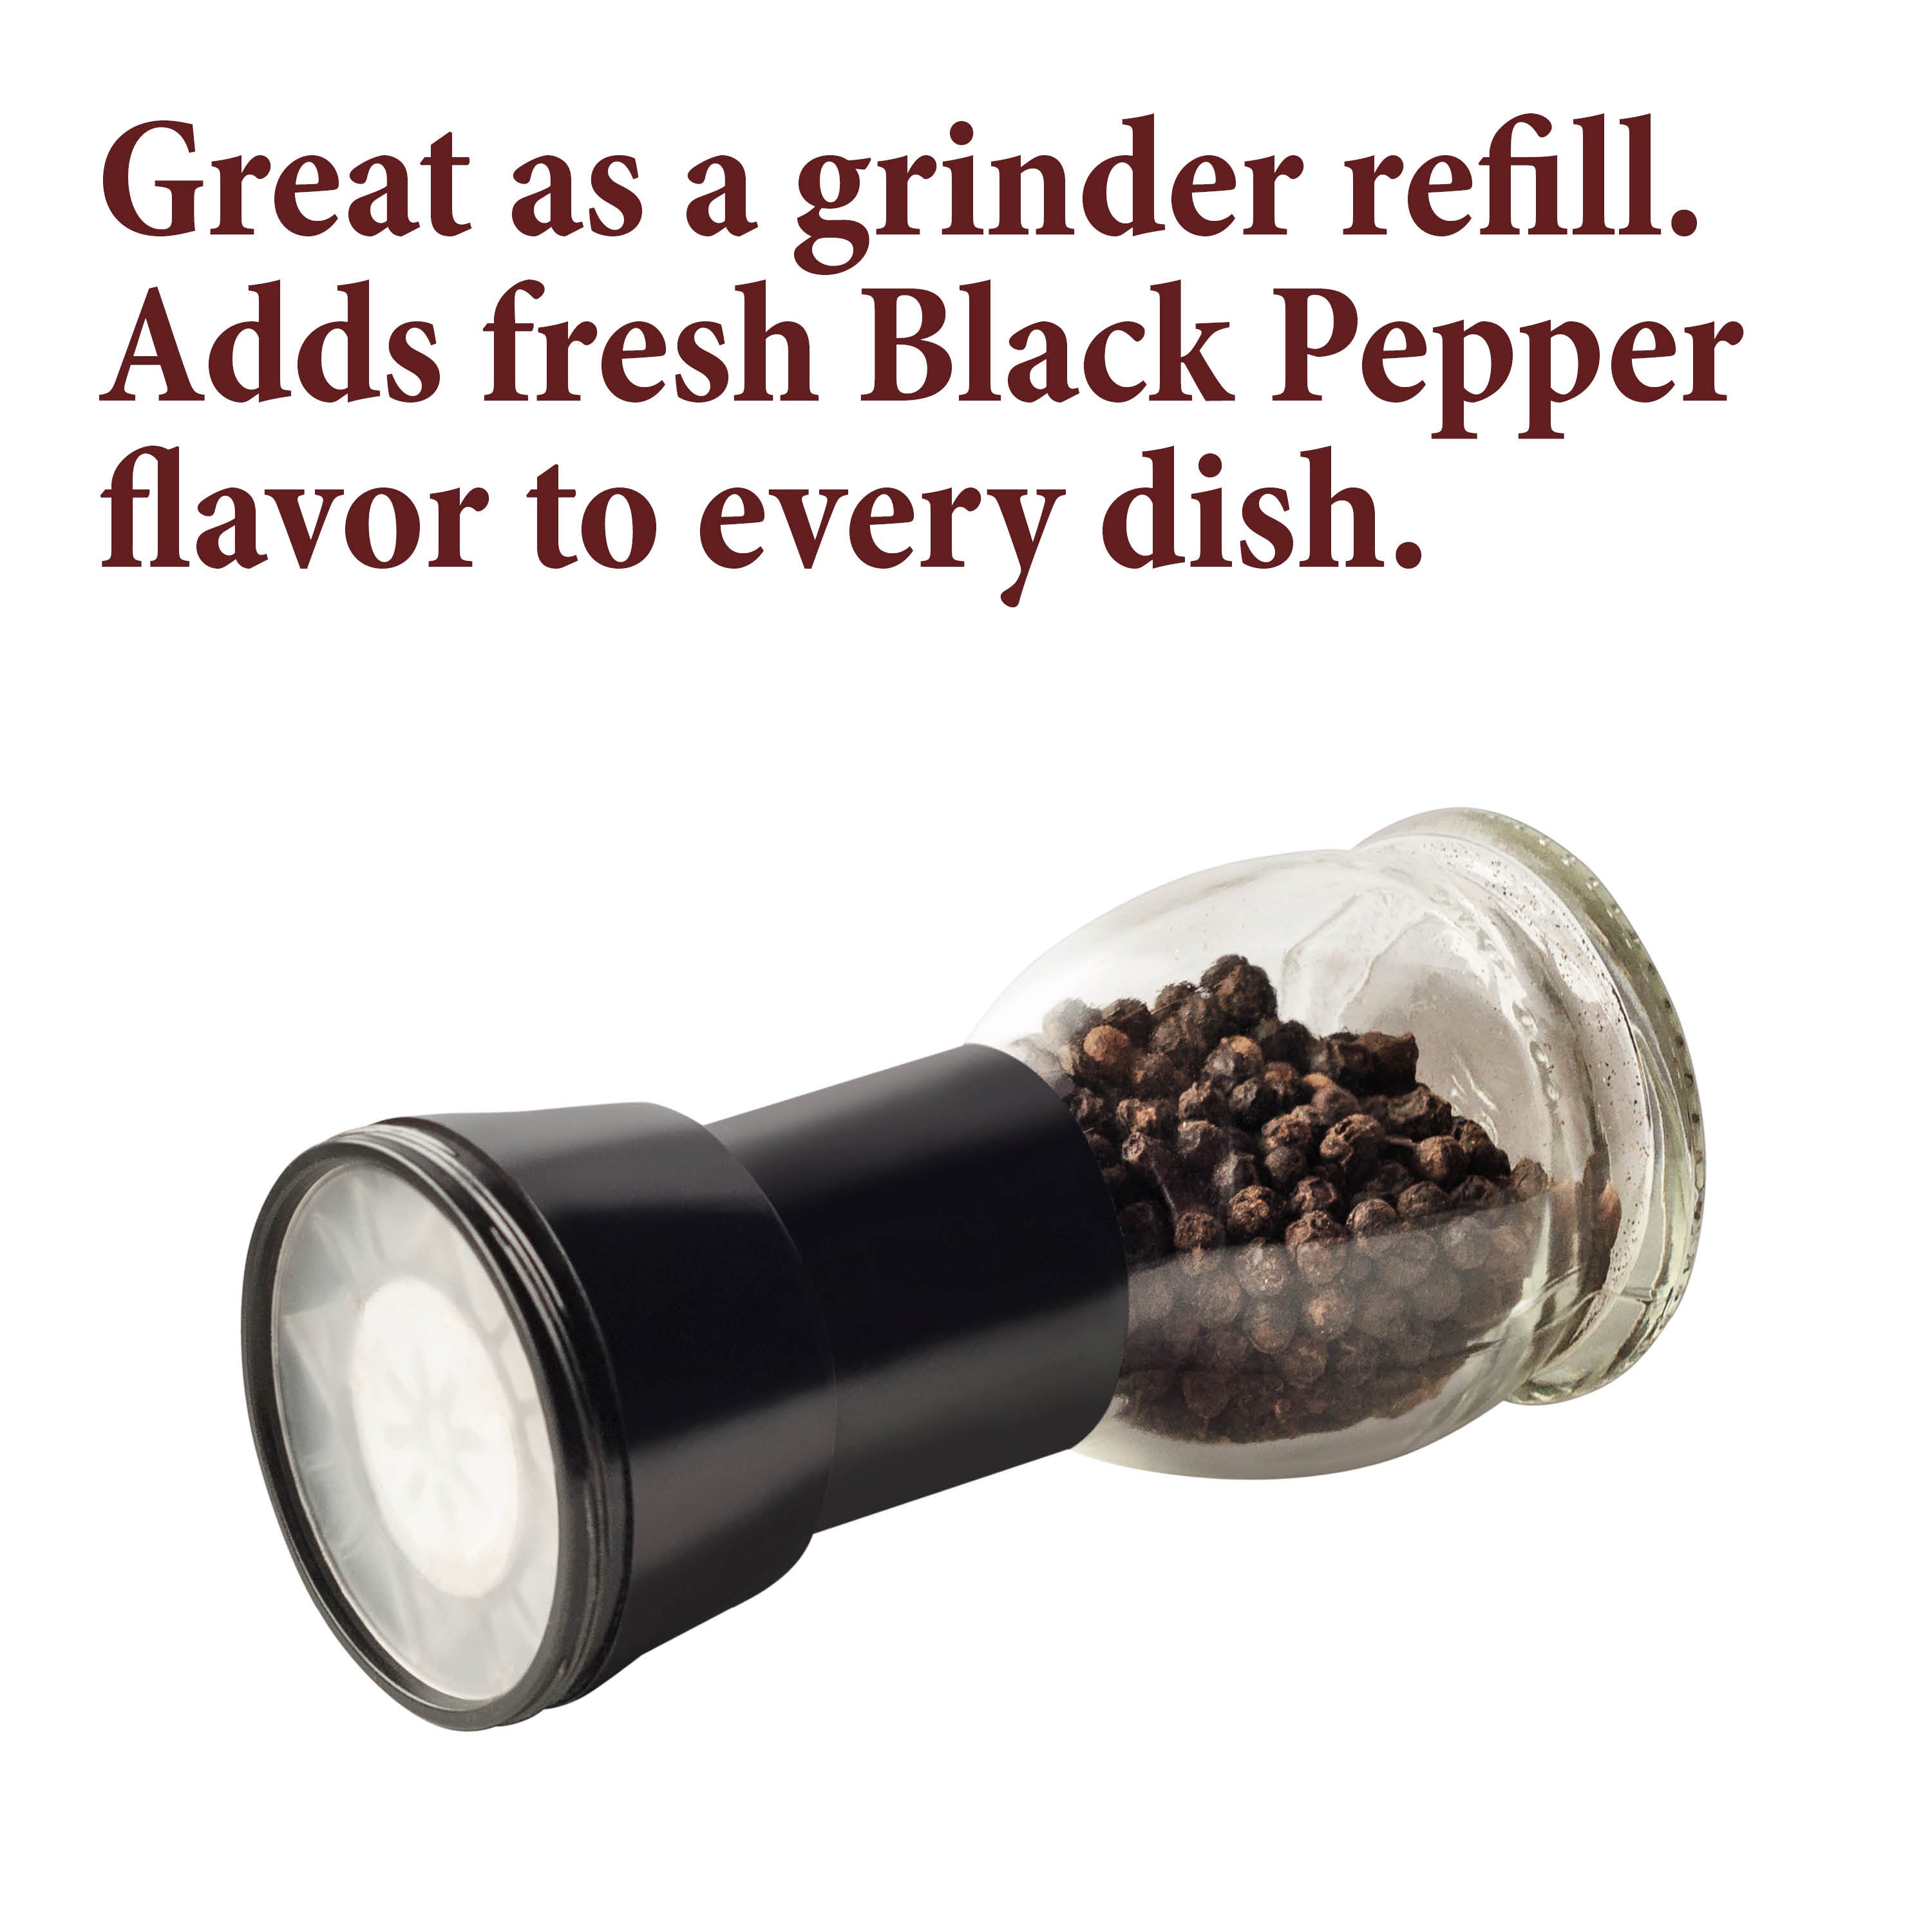 Black Peppercorn Grinder